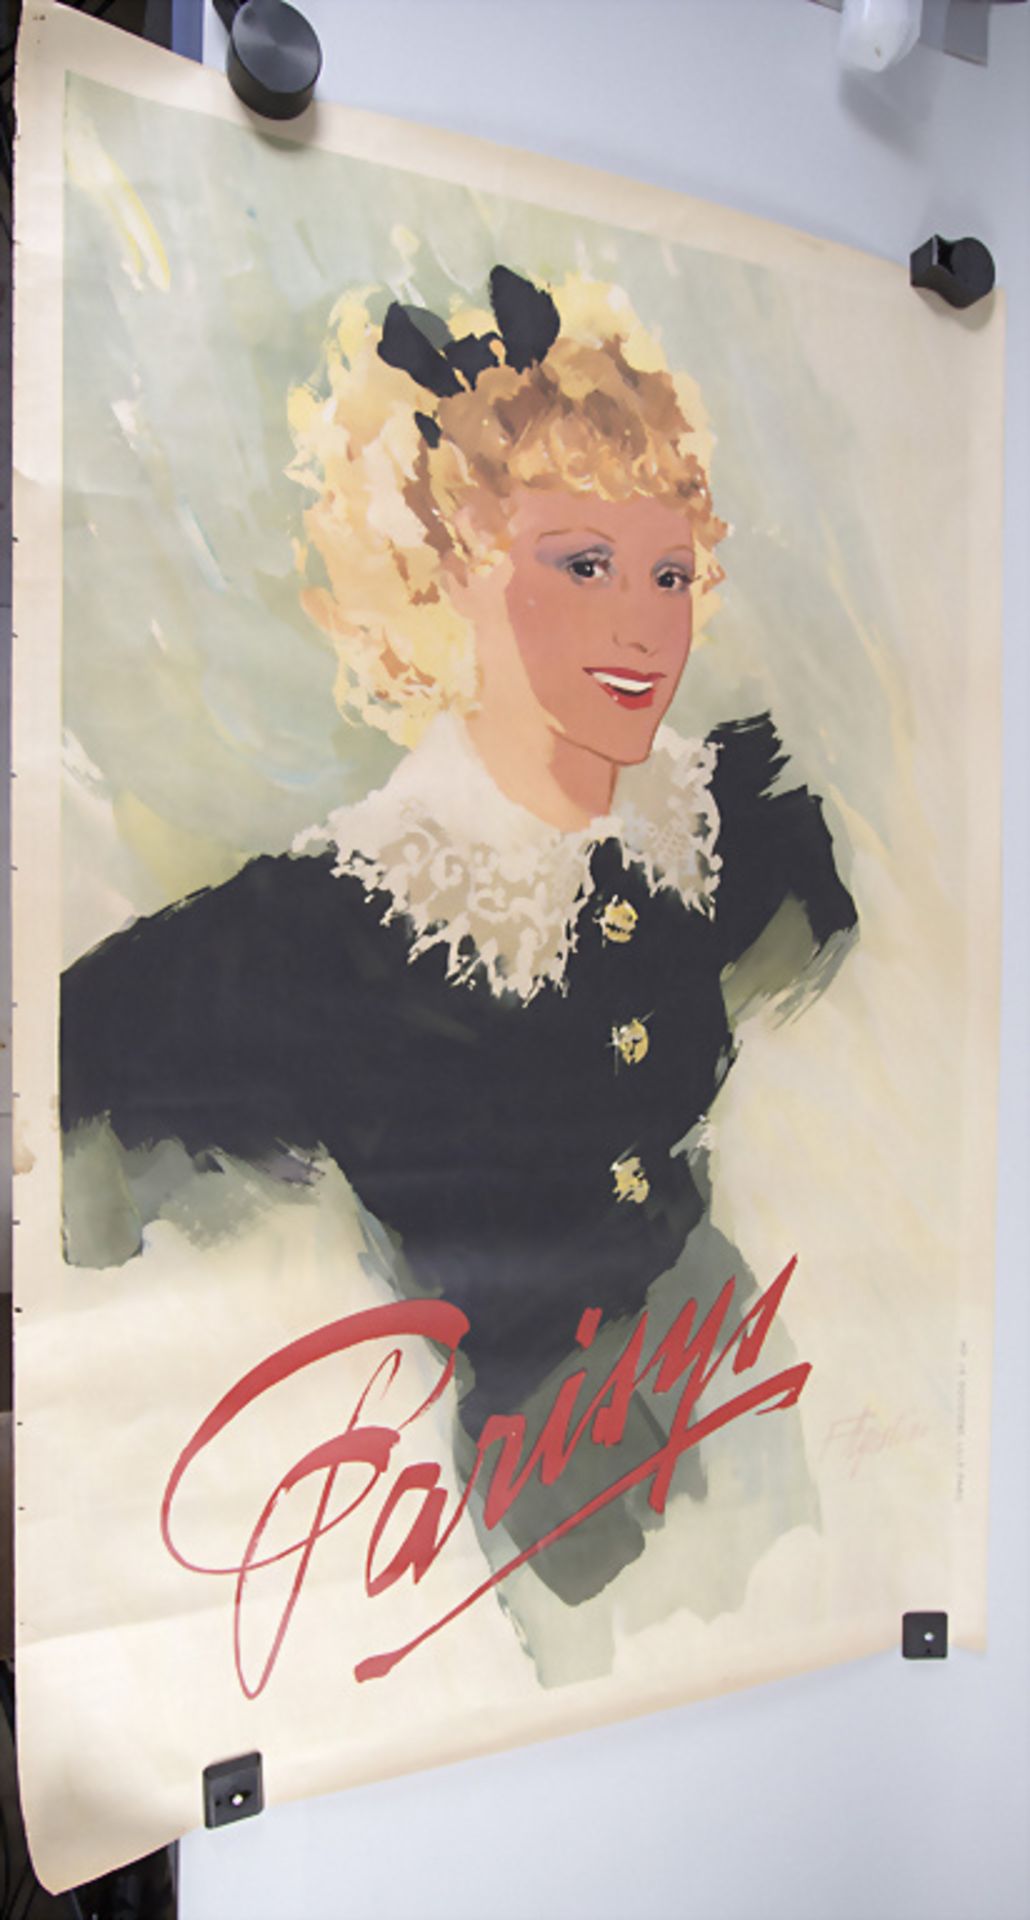 Plakat 'Pariserin', Frankreich, um 1930